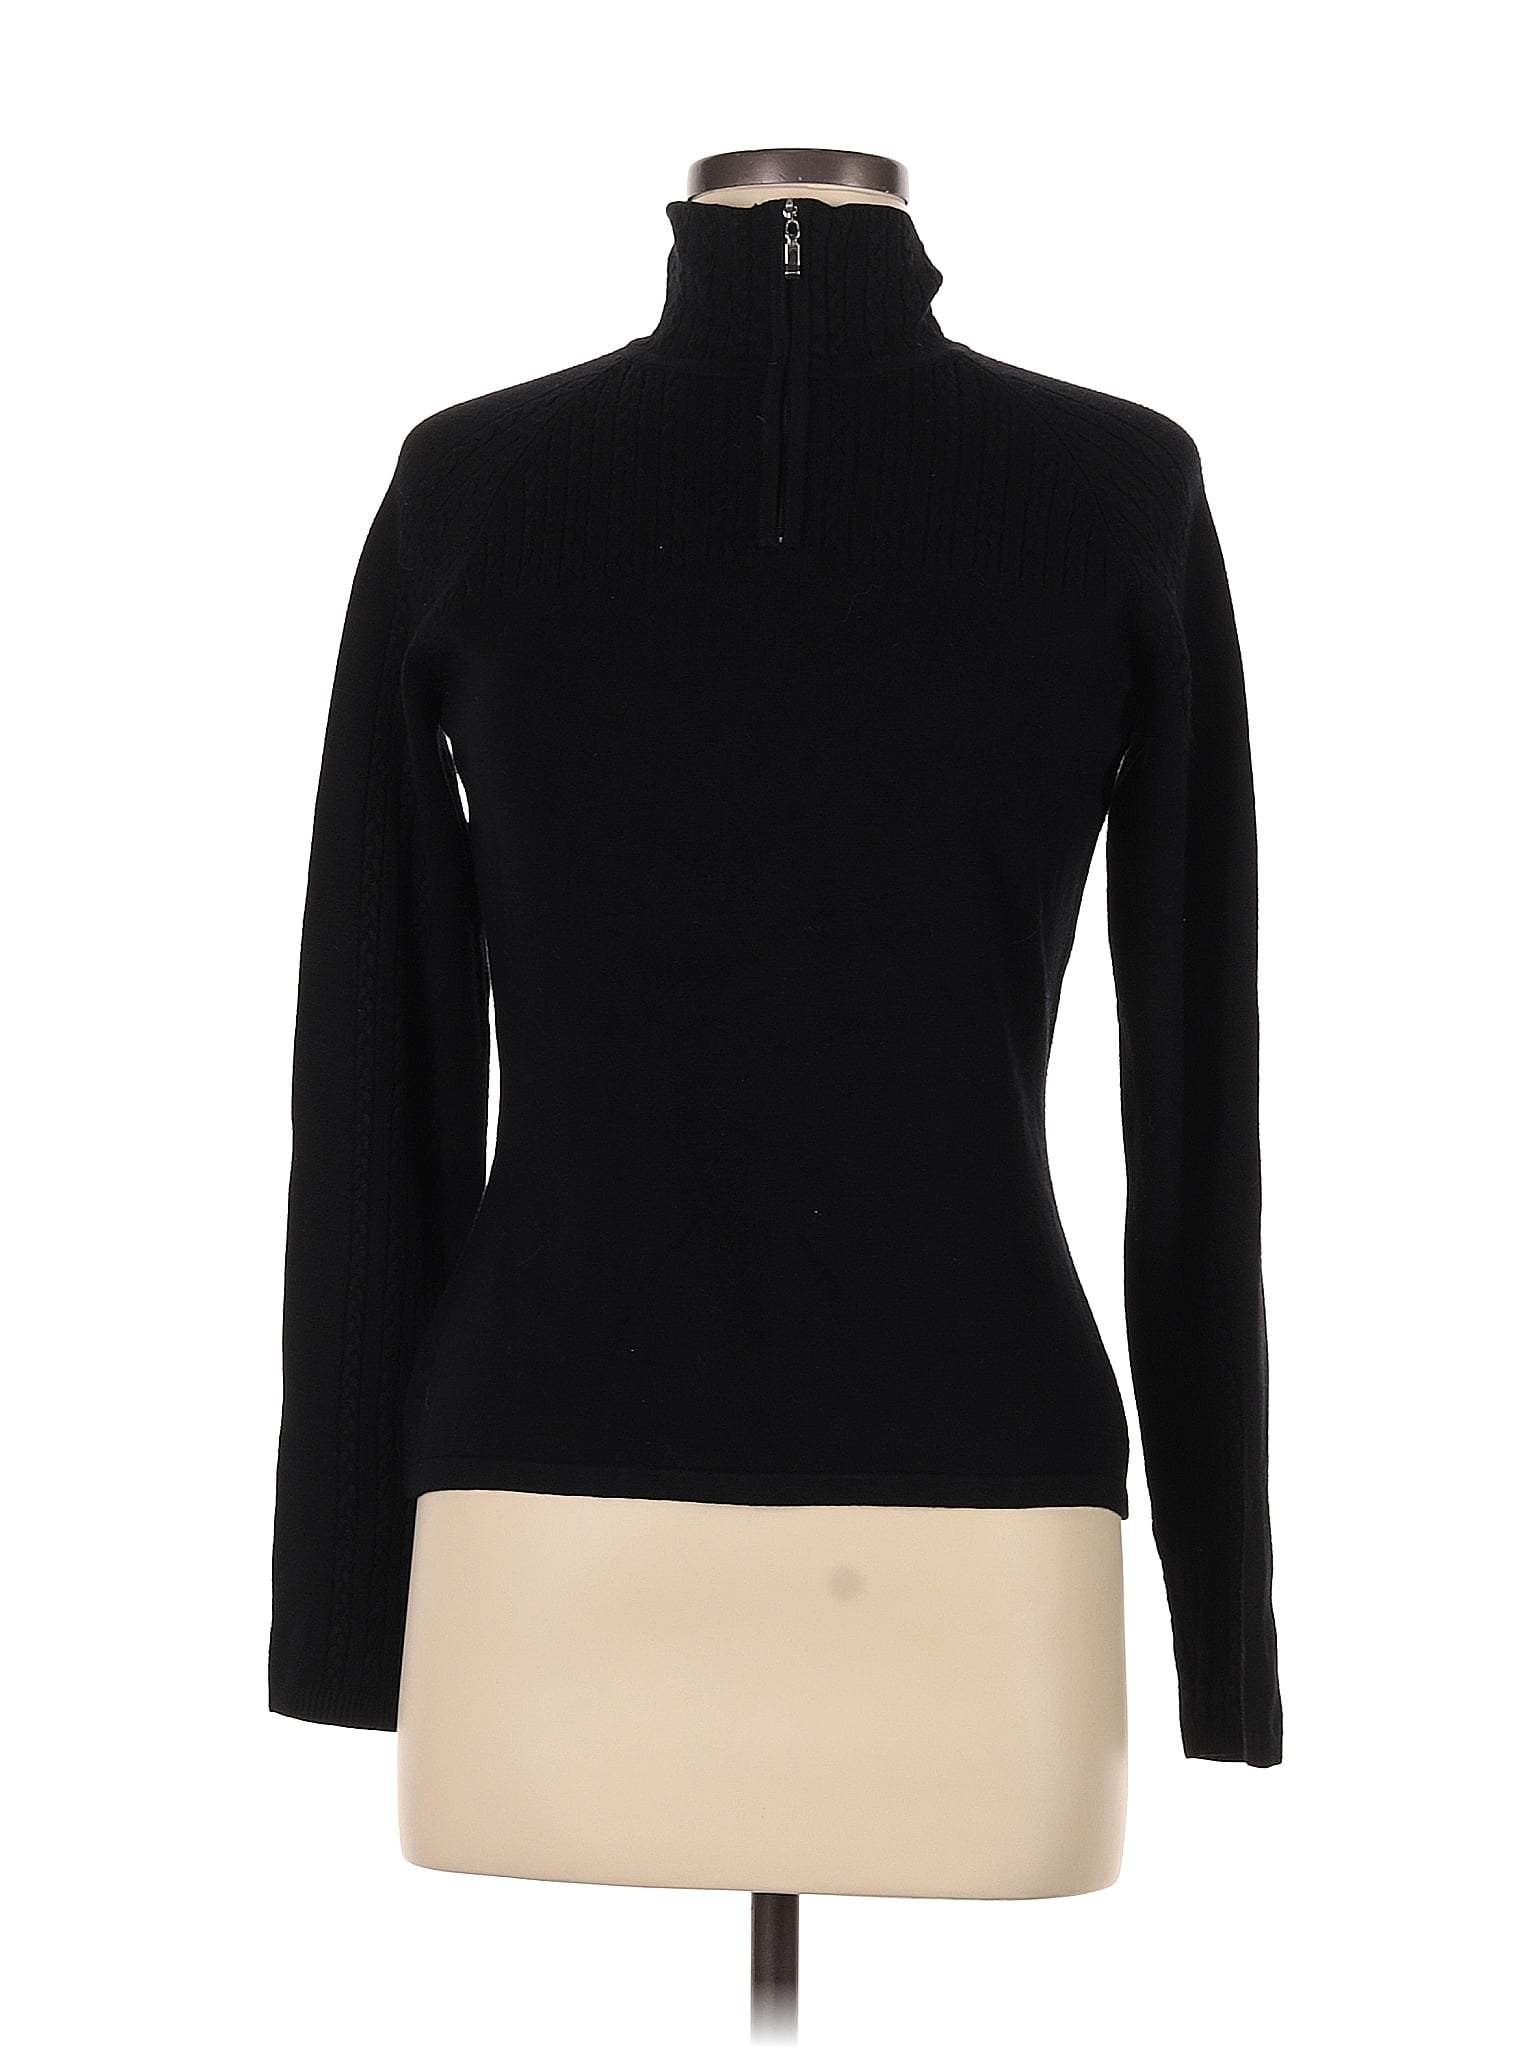 NILS Sportswear Color Block Solid Black Turtleneck Sweater Size M - 76% off